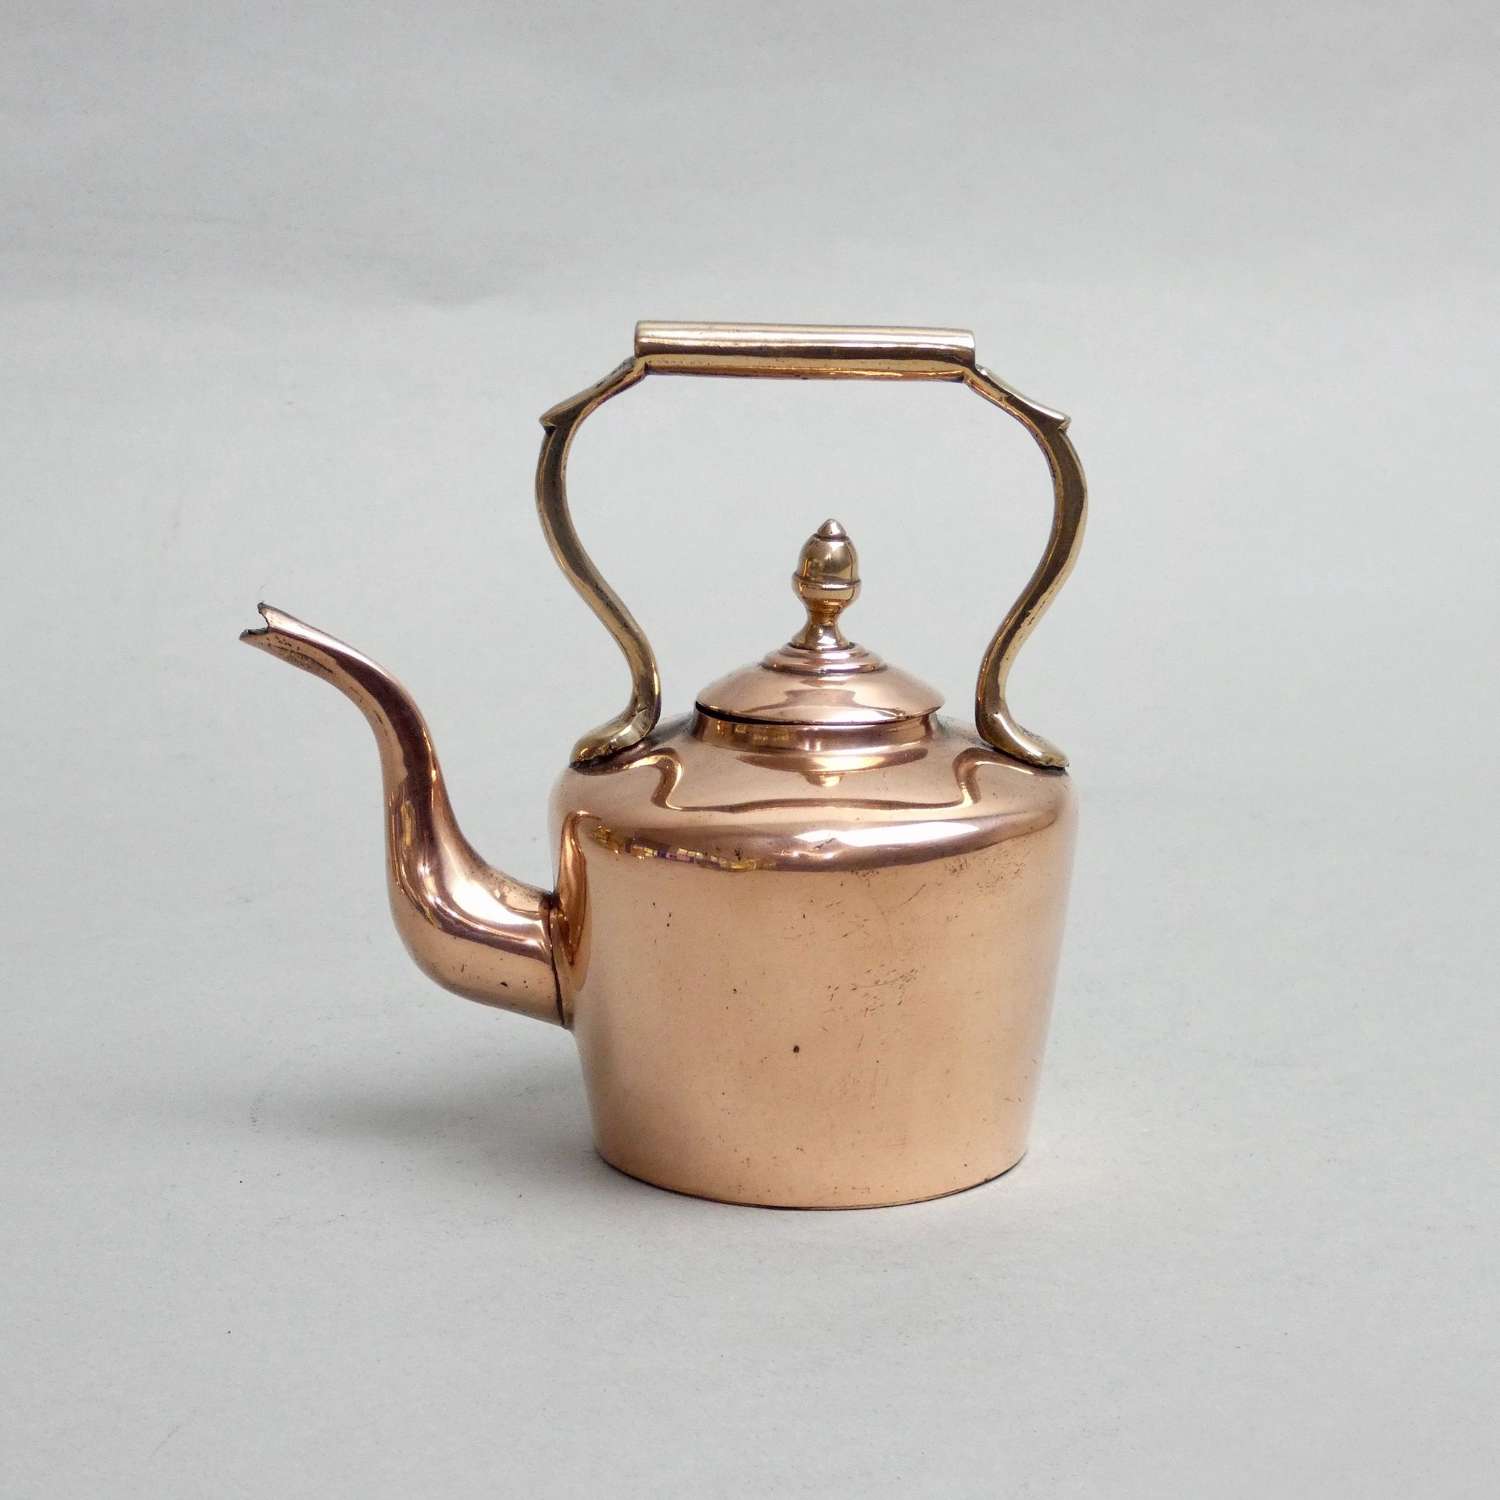 Miniature copper kettle